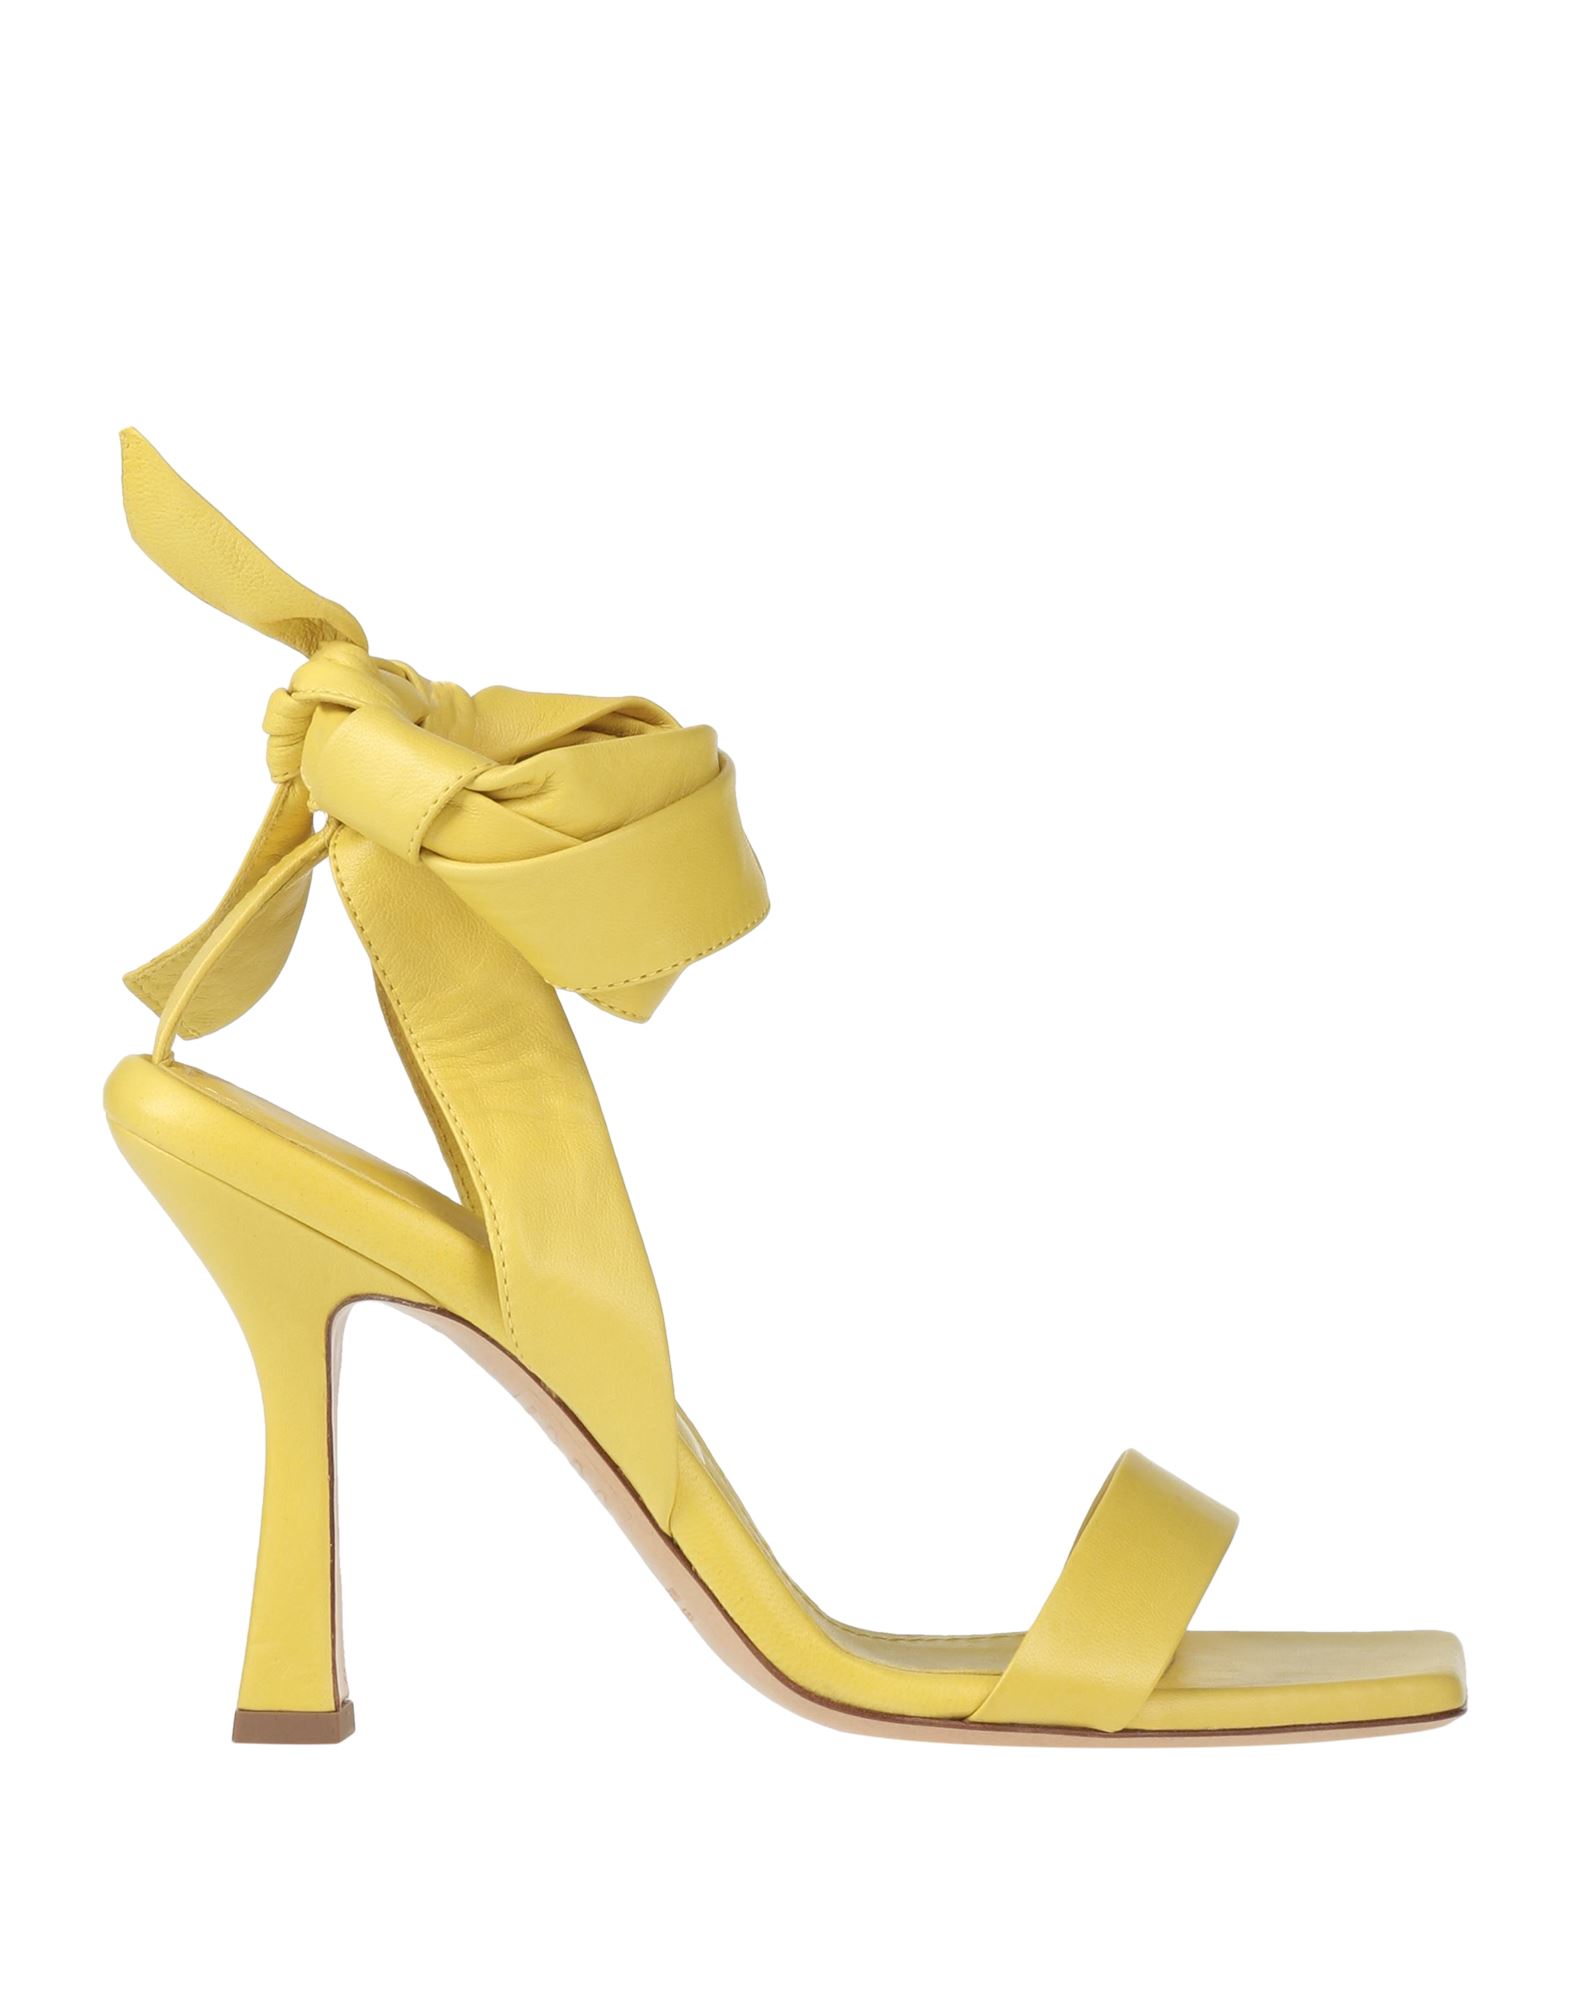 Aldo Castagna Sandals In Yellow